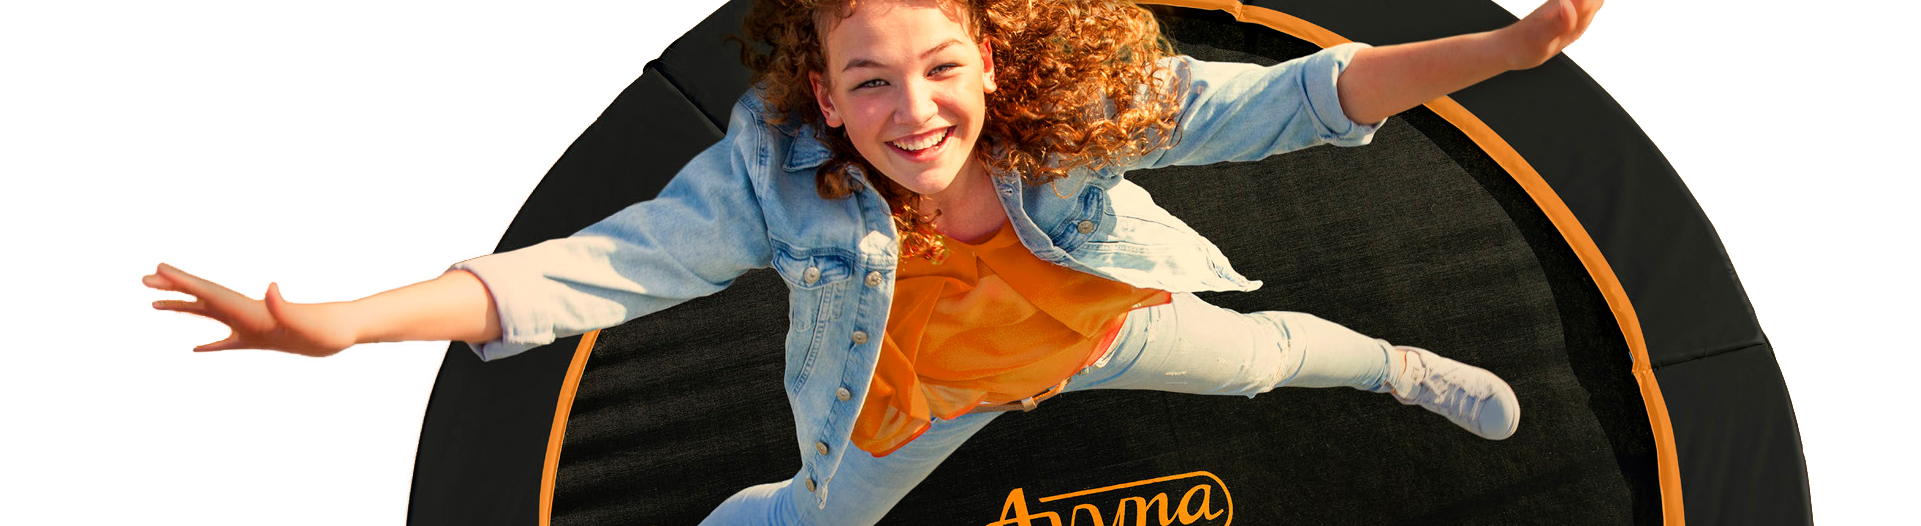 Avyna Nederland - trampoline.nl